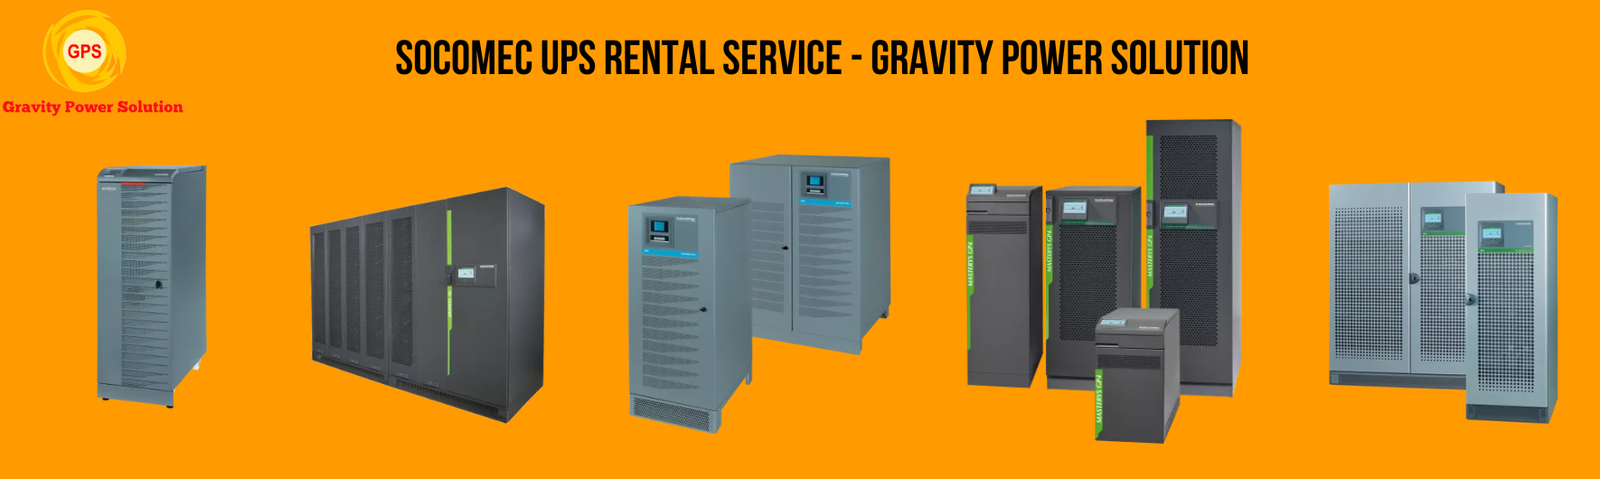 Socomec UPS Rental Service - Gravity Power Solution